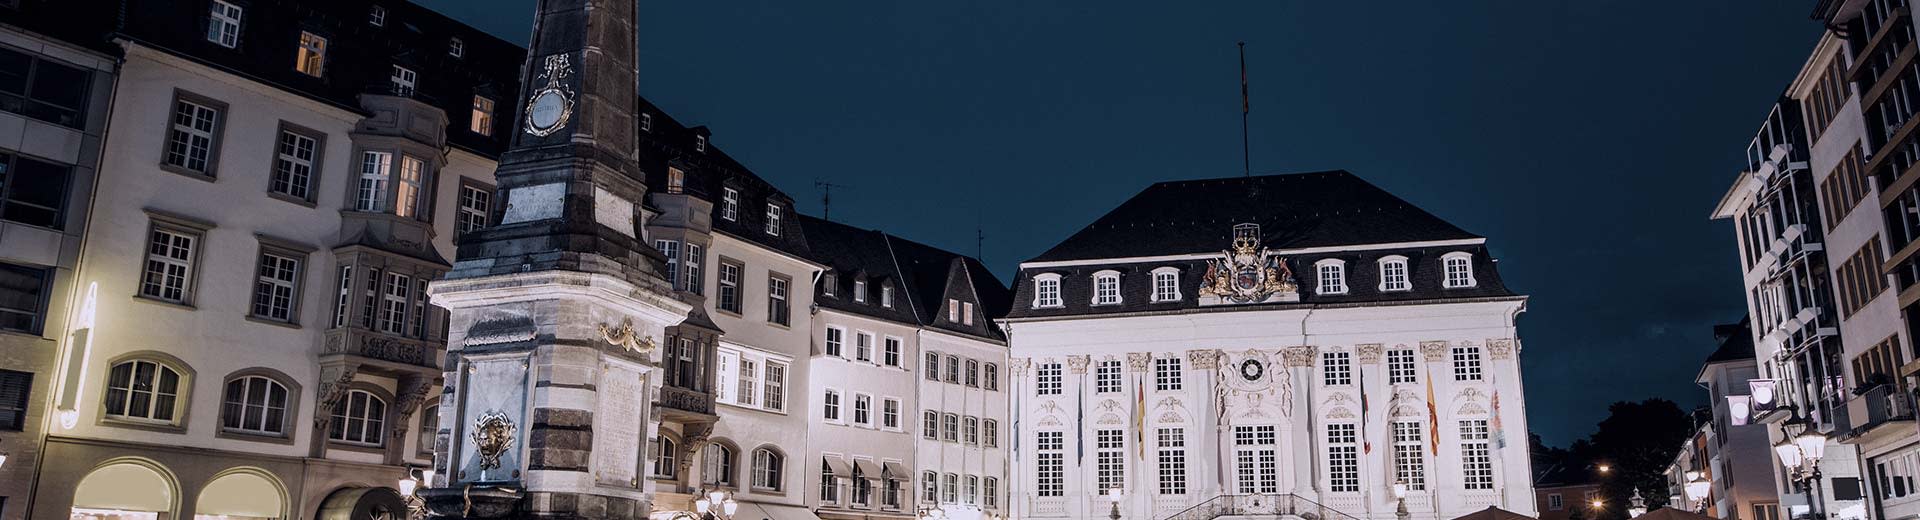 Por la noche, se ilumina una hermosa e histórica plaza de la ciudad en Bonn.